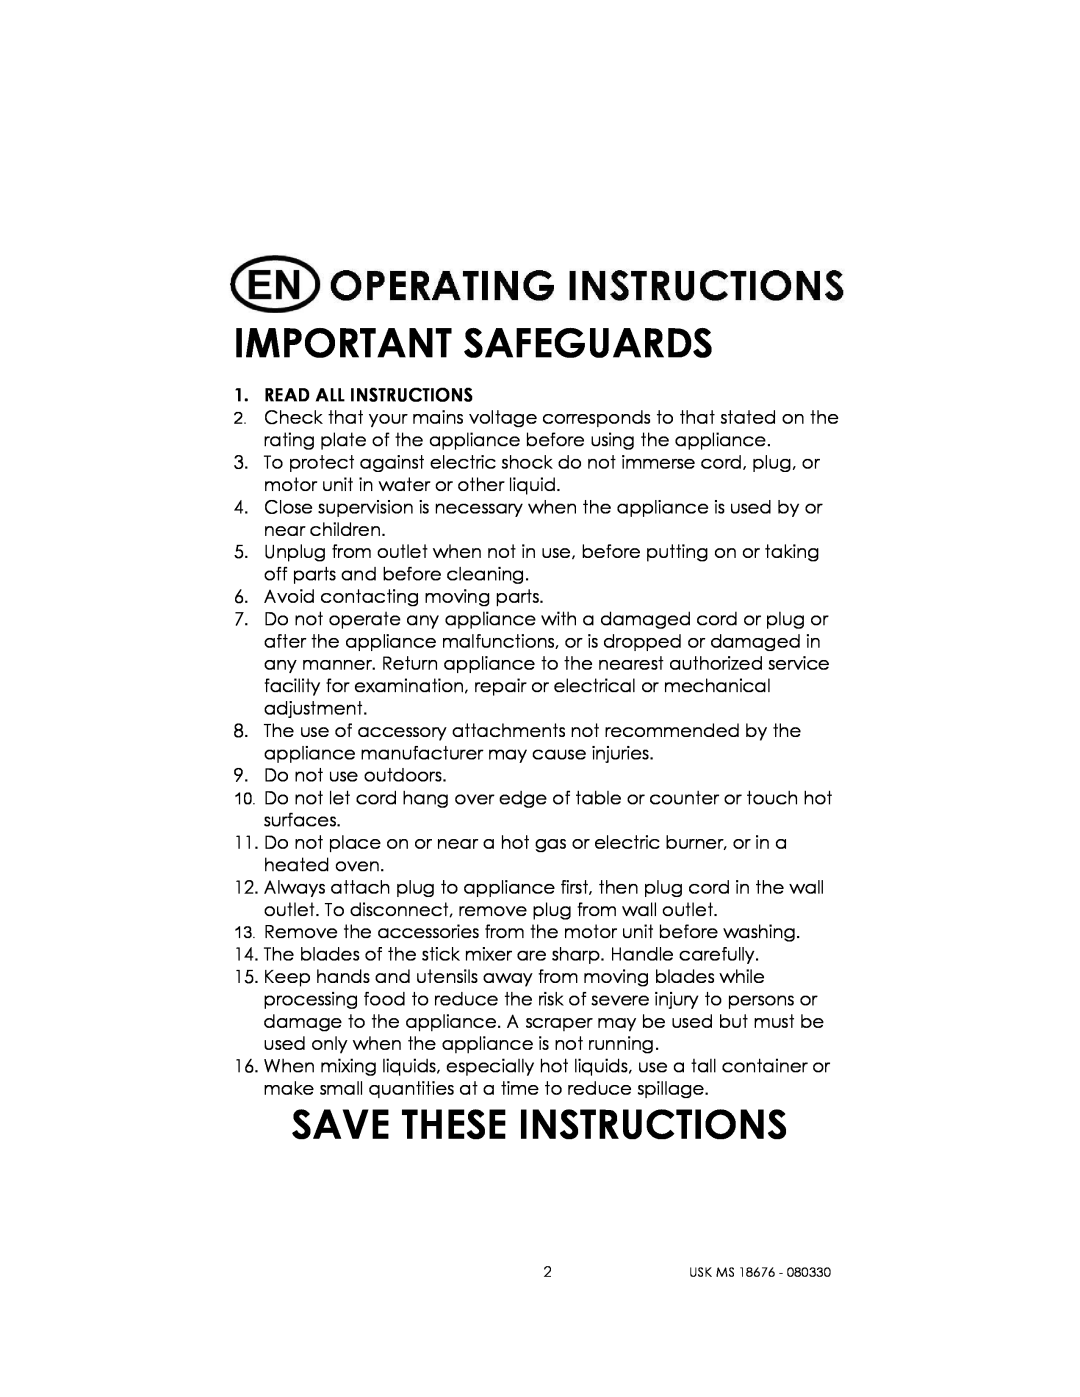 Kalorik USK MS 18676 manual Important Safeguards, Save These Instructions 